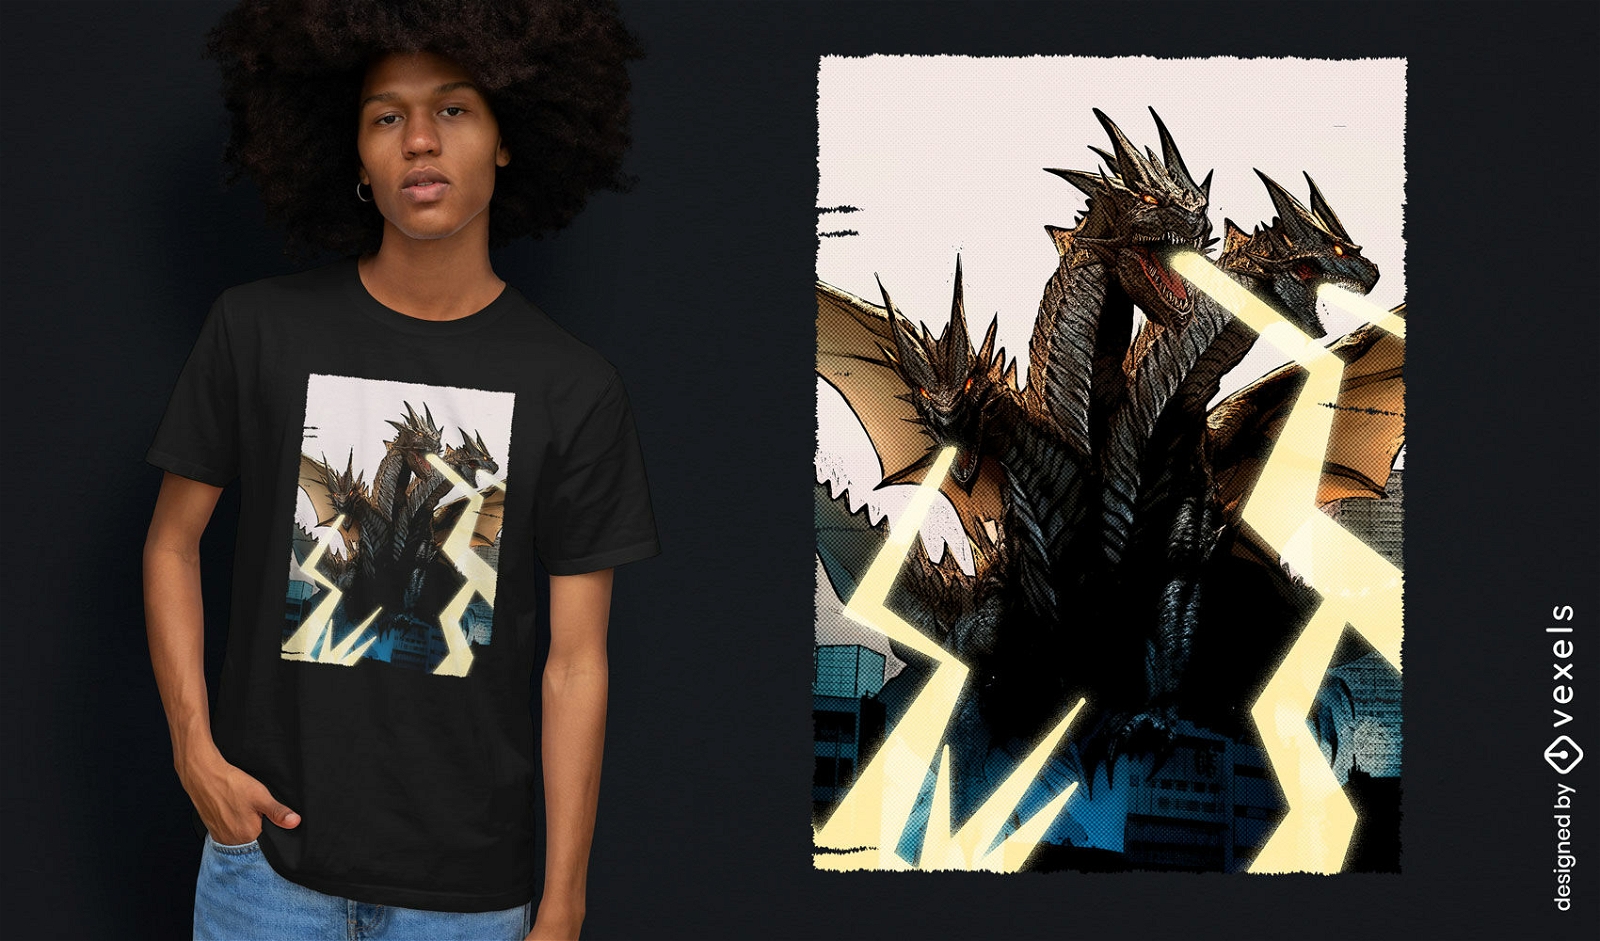 Mythical tri-headed dragon t-shirt design